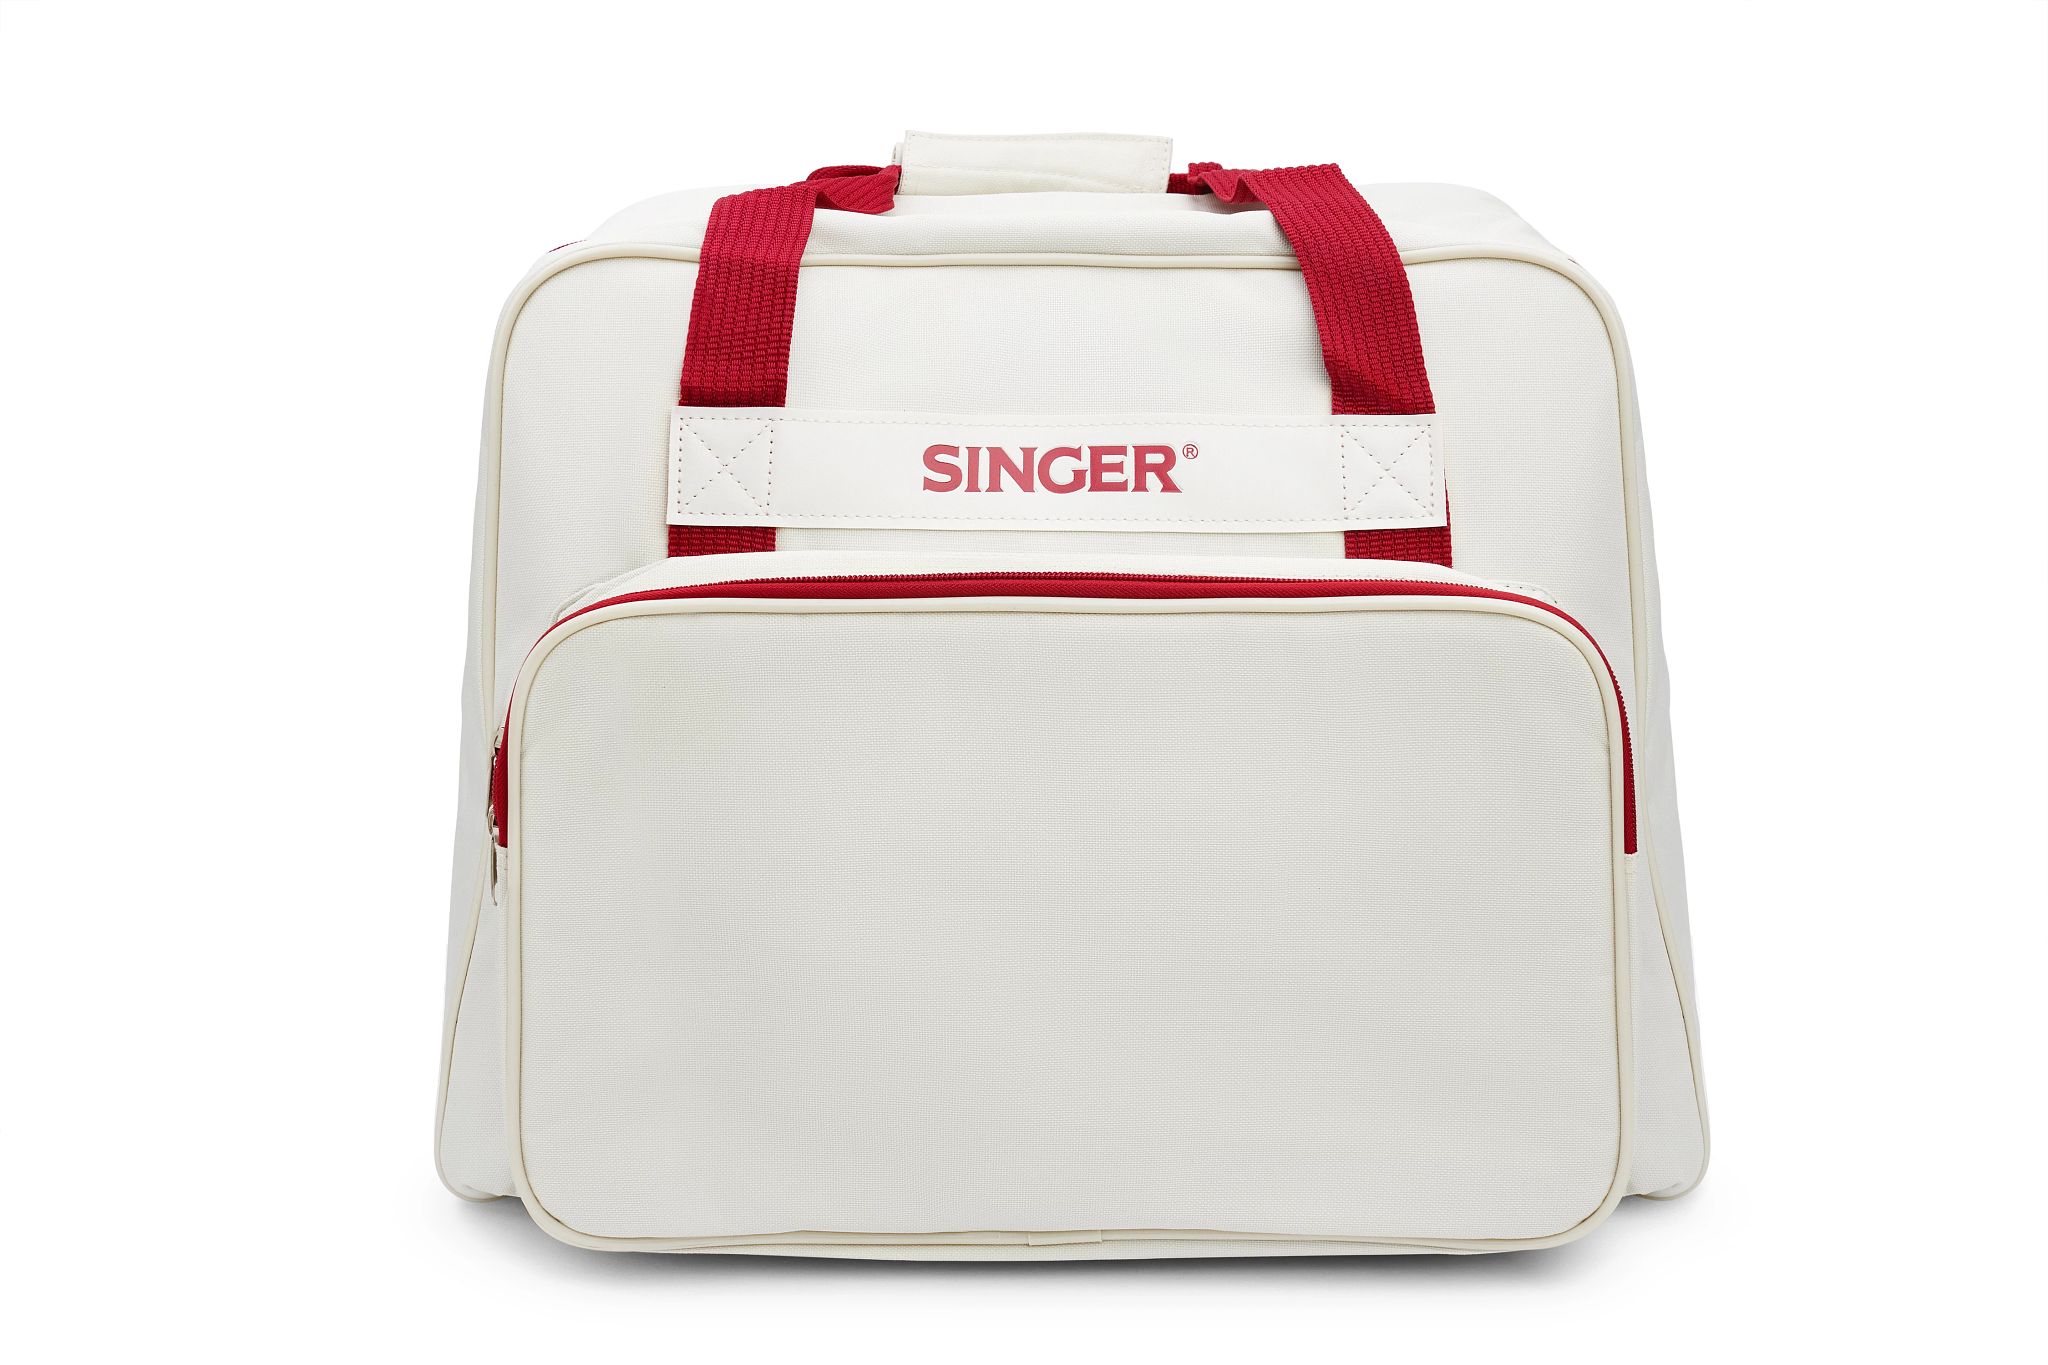 Singer Universal Hard Carrying Case, White - 20228699